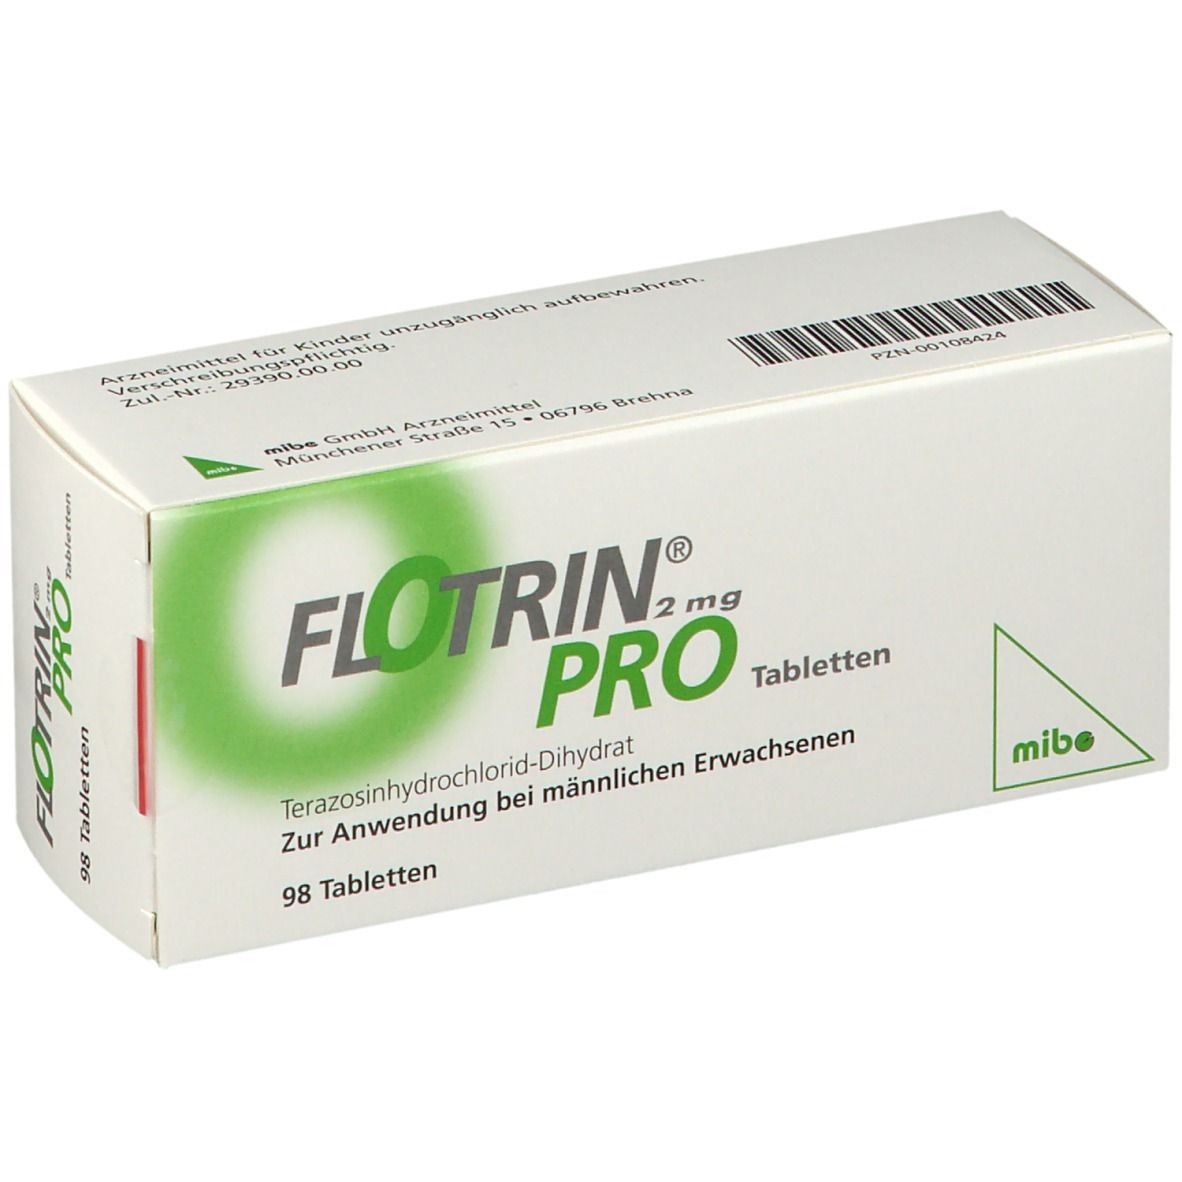 Flotrin 2 mg Pro